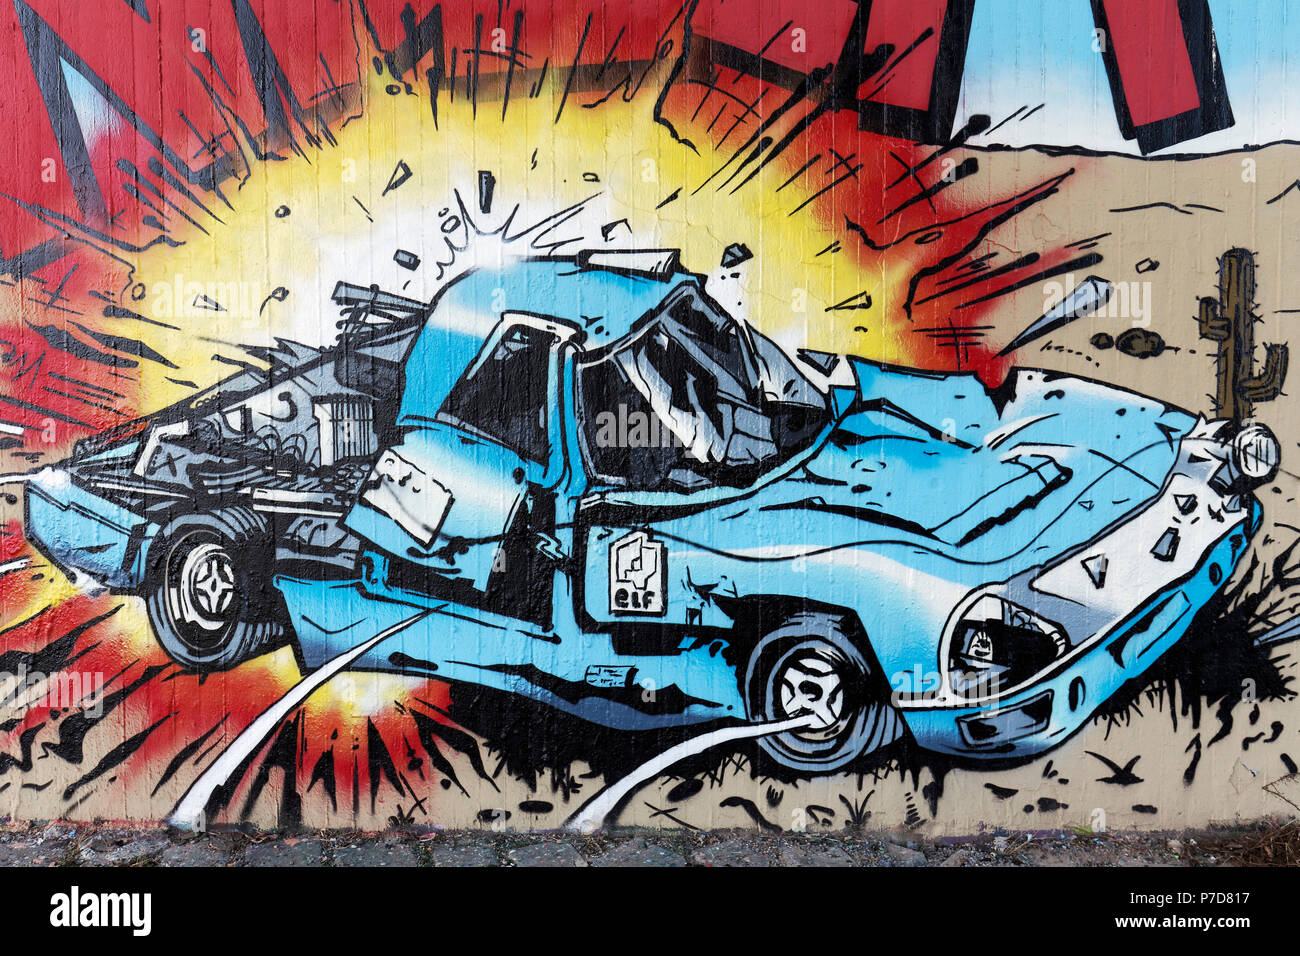 La explosión del automóvil, bombardear, crash, comic-estilo graffiti, street art, Düsseldorf, Renania del Norte-Westfalia, Alemania Foto de stock